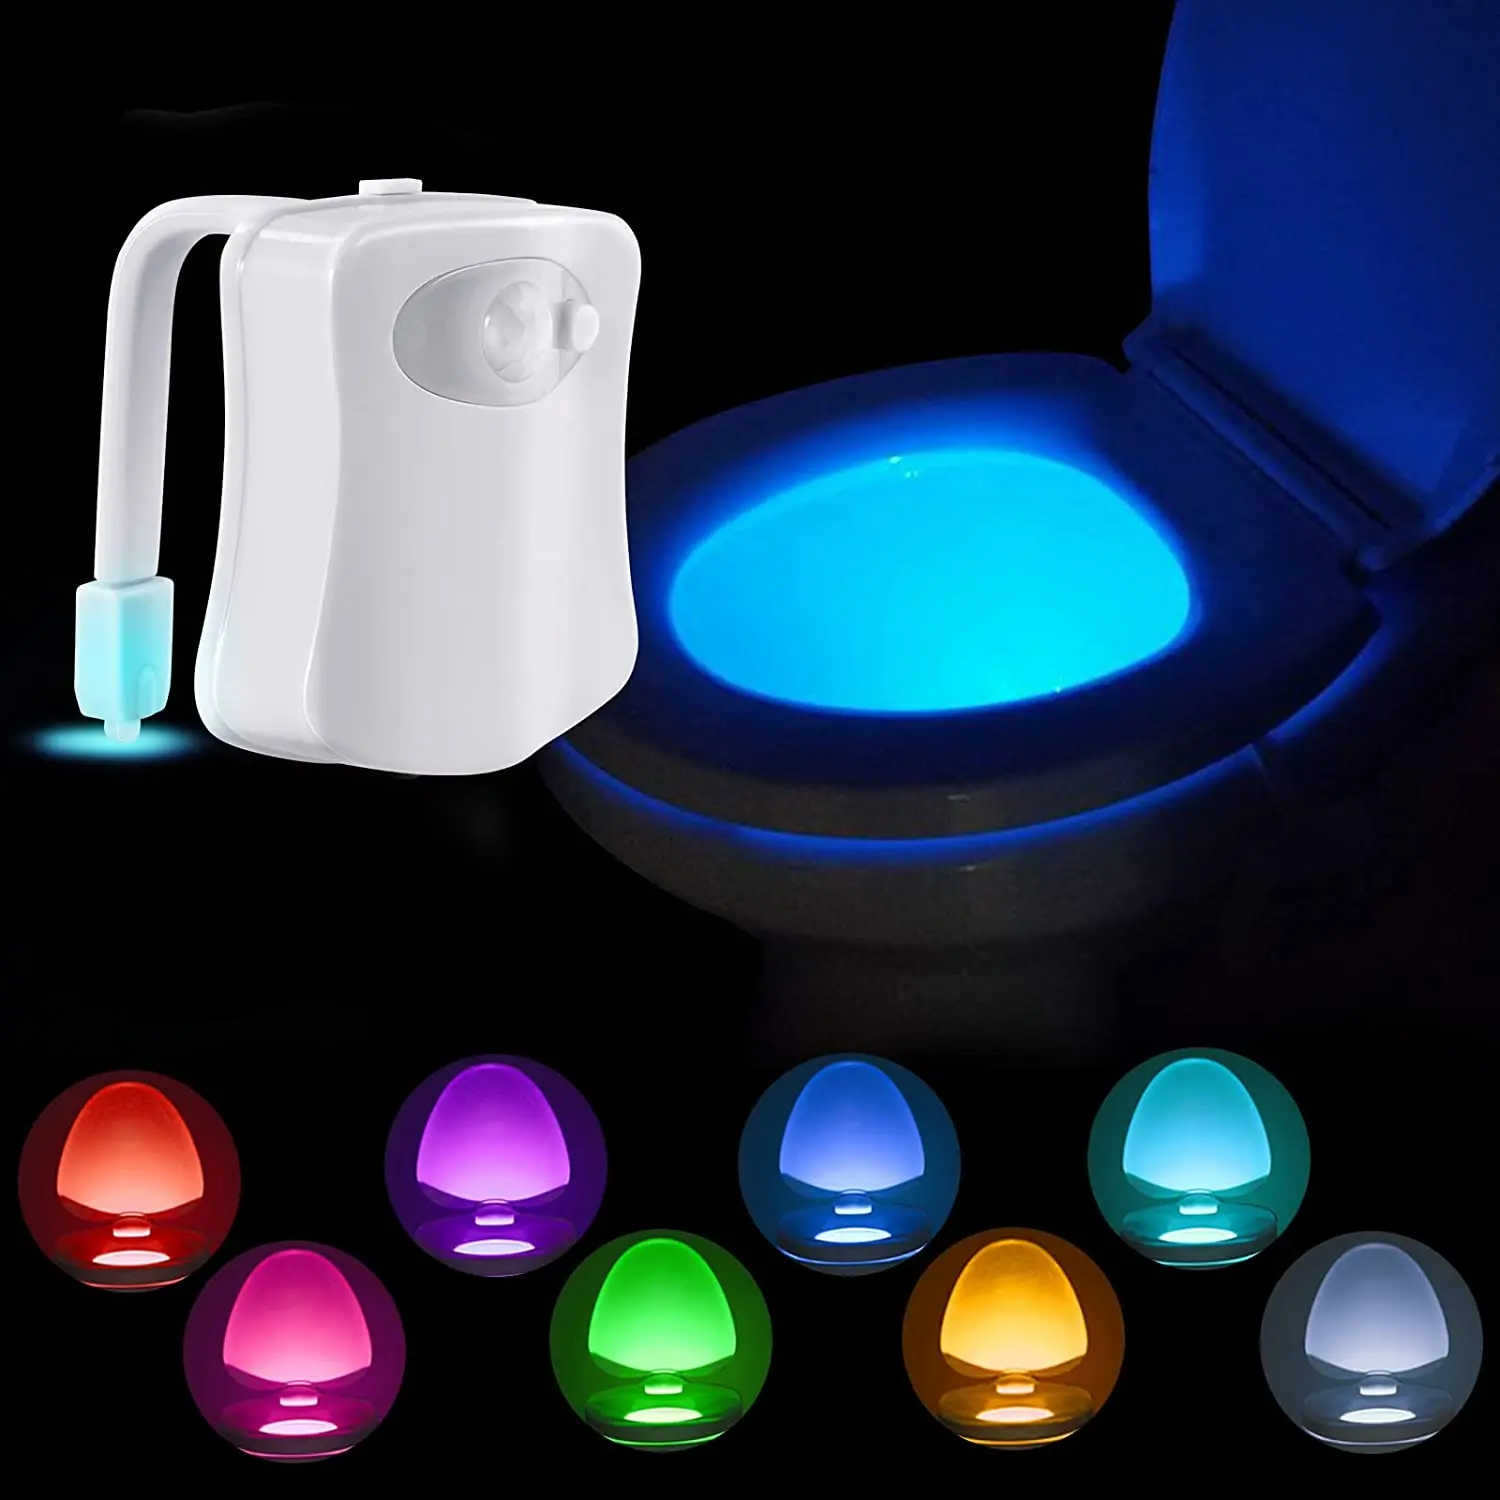 nursery night light Smart PIR Motion Sensor Toilet Seat Night Light 8 Colors Waterproof Backlight For Toilet Bowl LED Luminaria Lamp WC Toilet Light led night light Night Lights